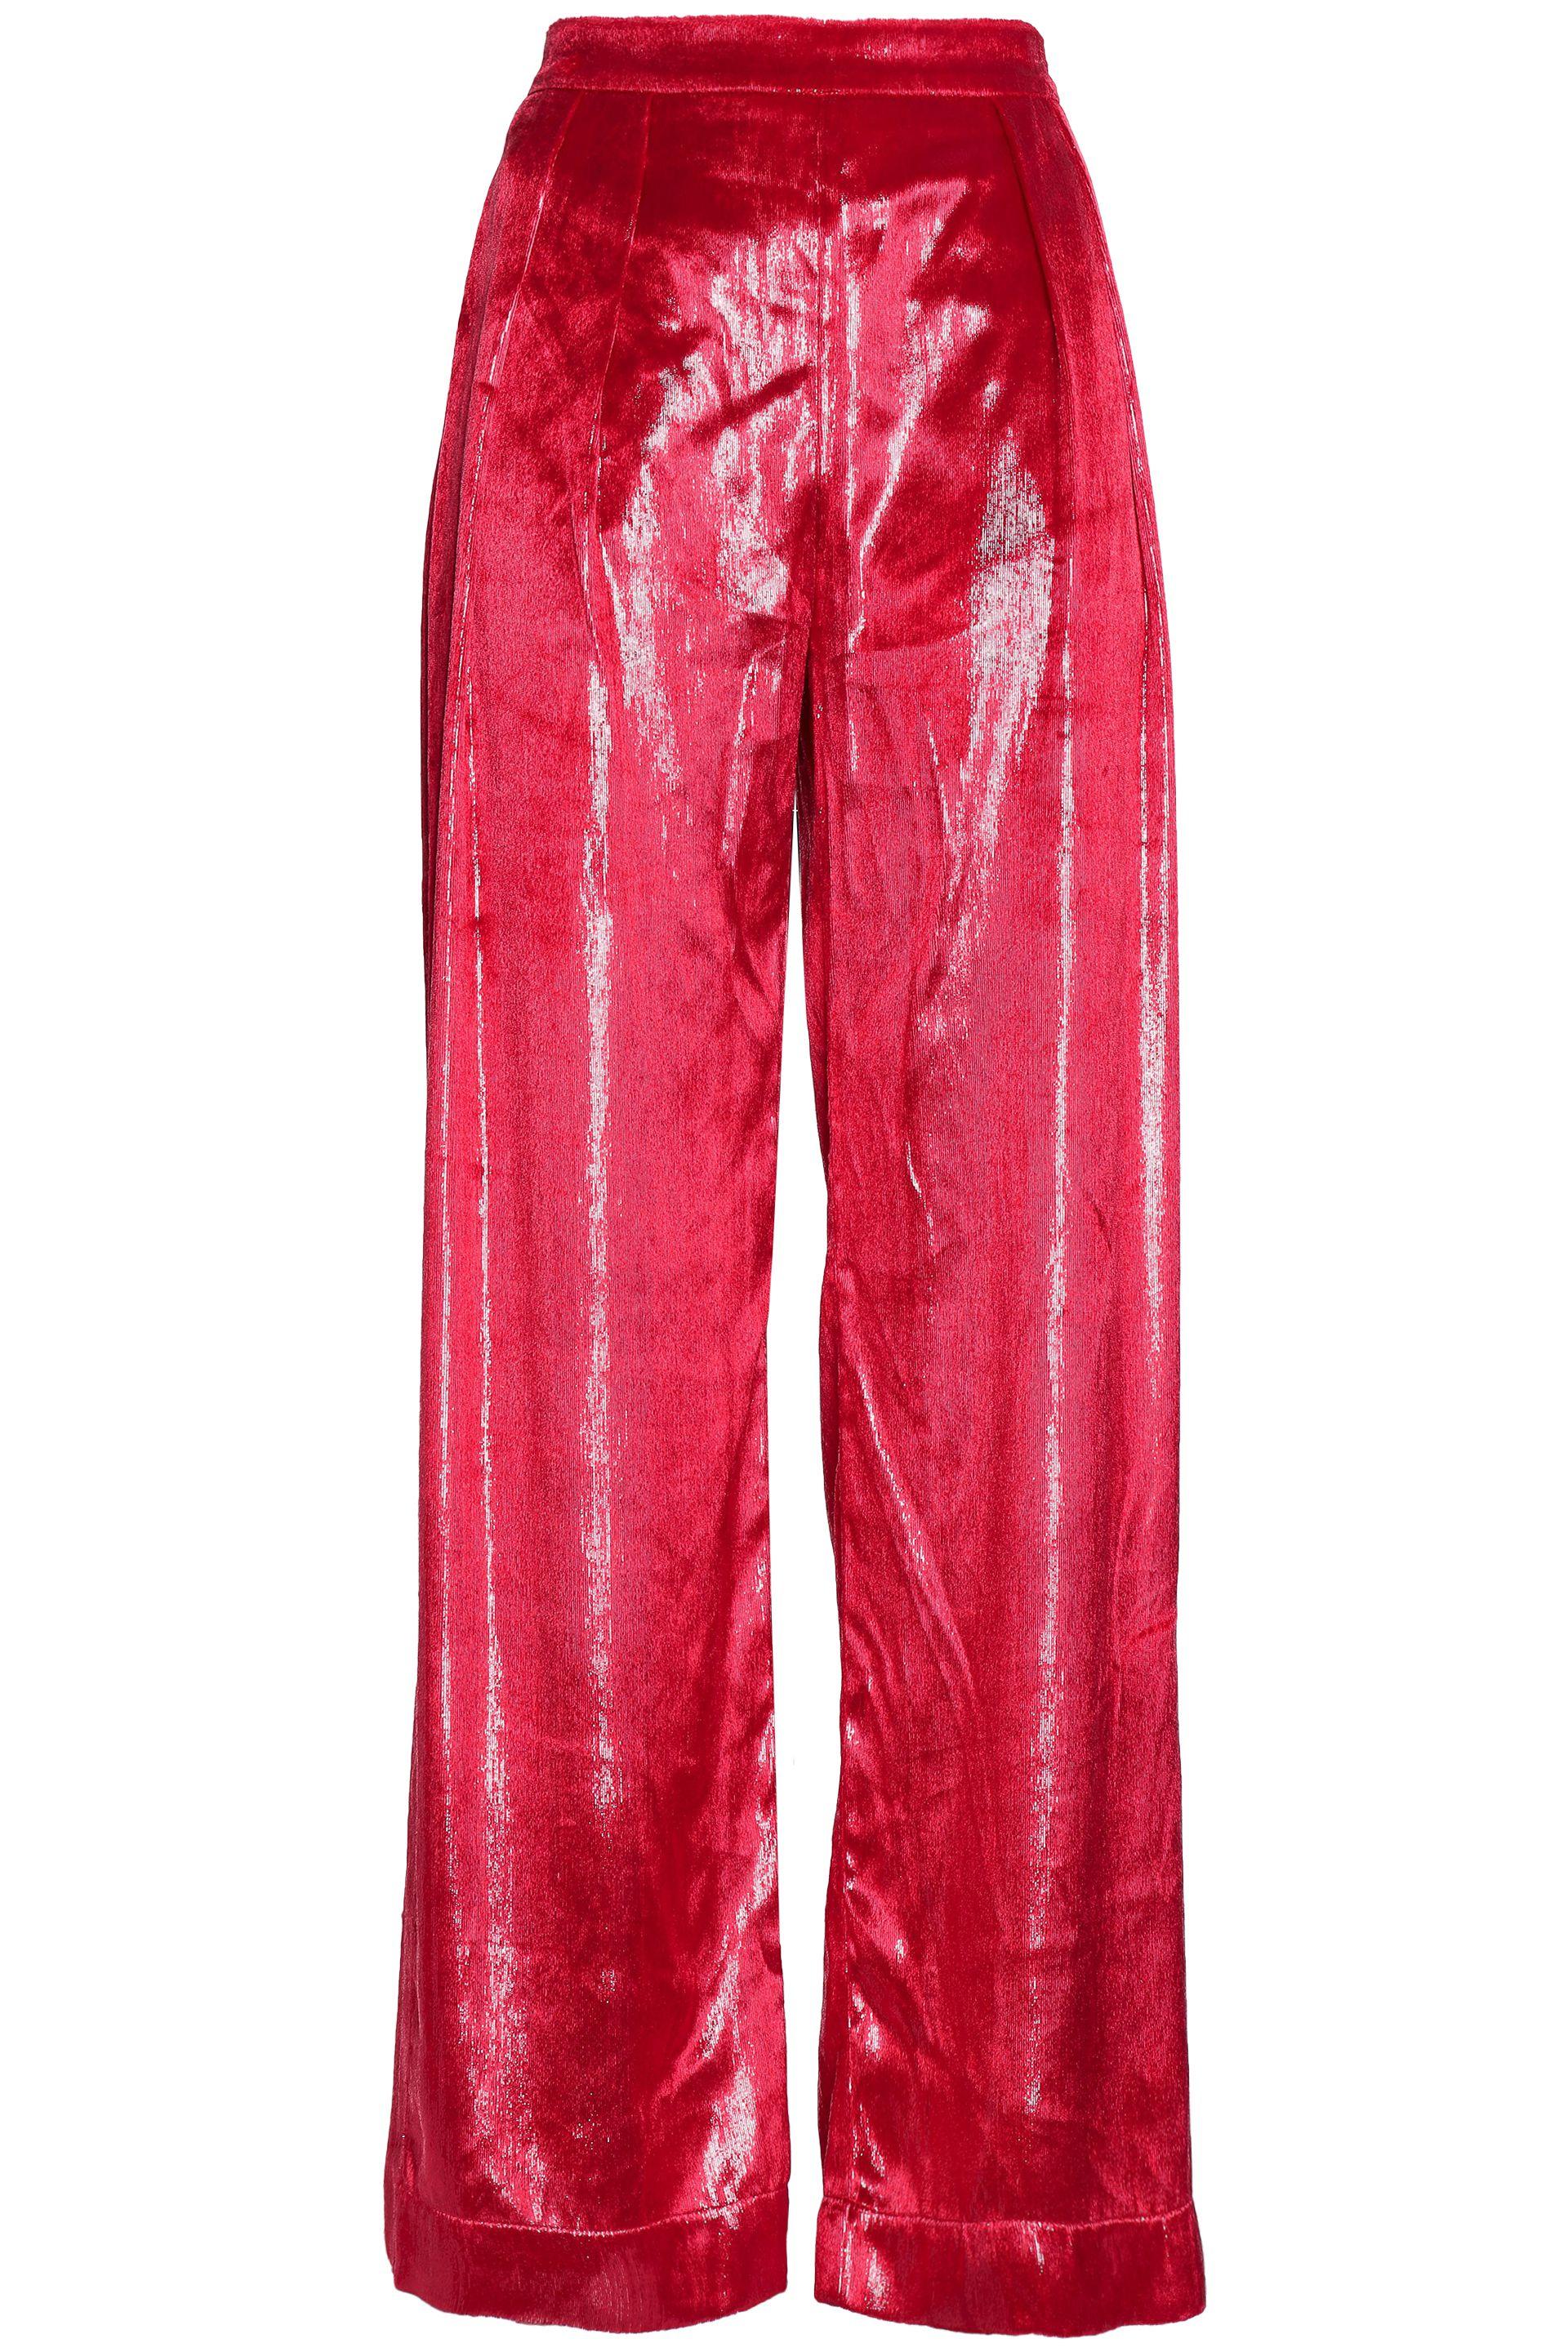 Lyst - Michael Lo Sordo Woman Metallic Velvet Wide-leg Pants Red in Red